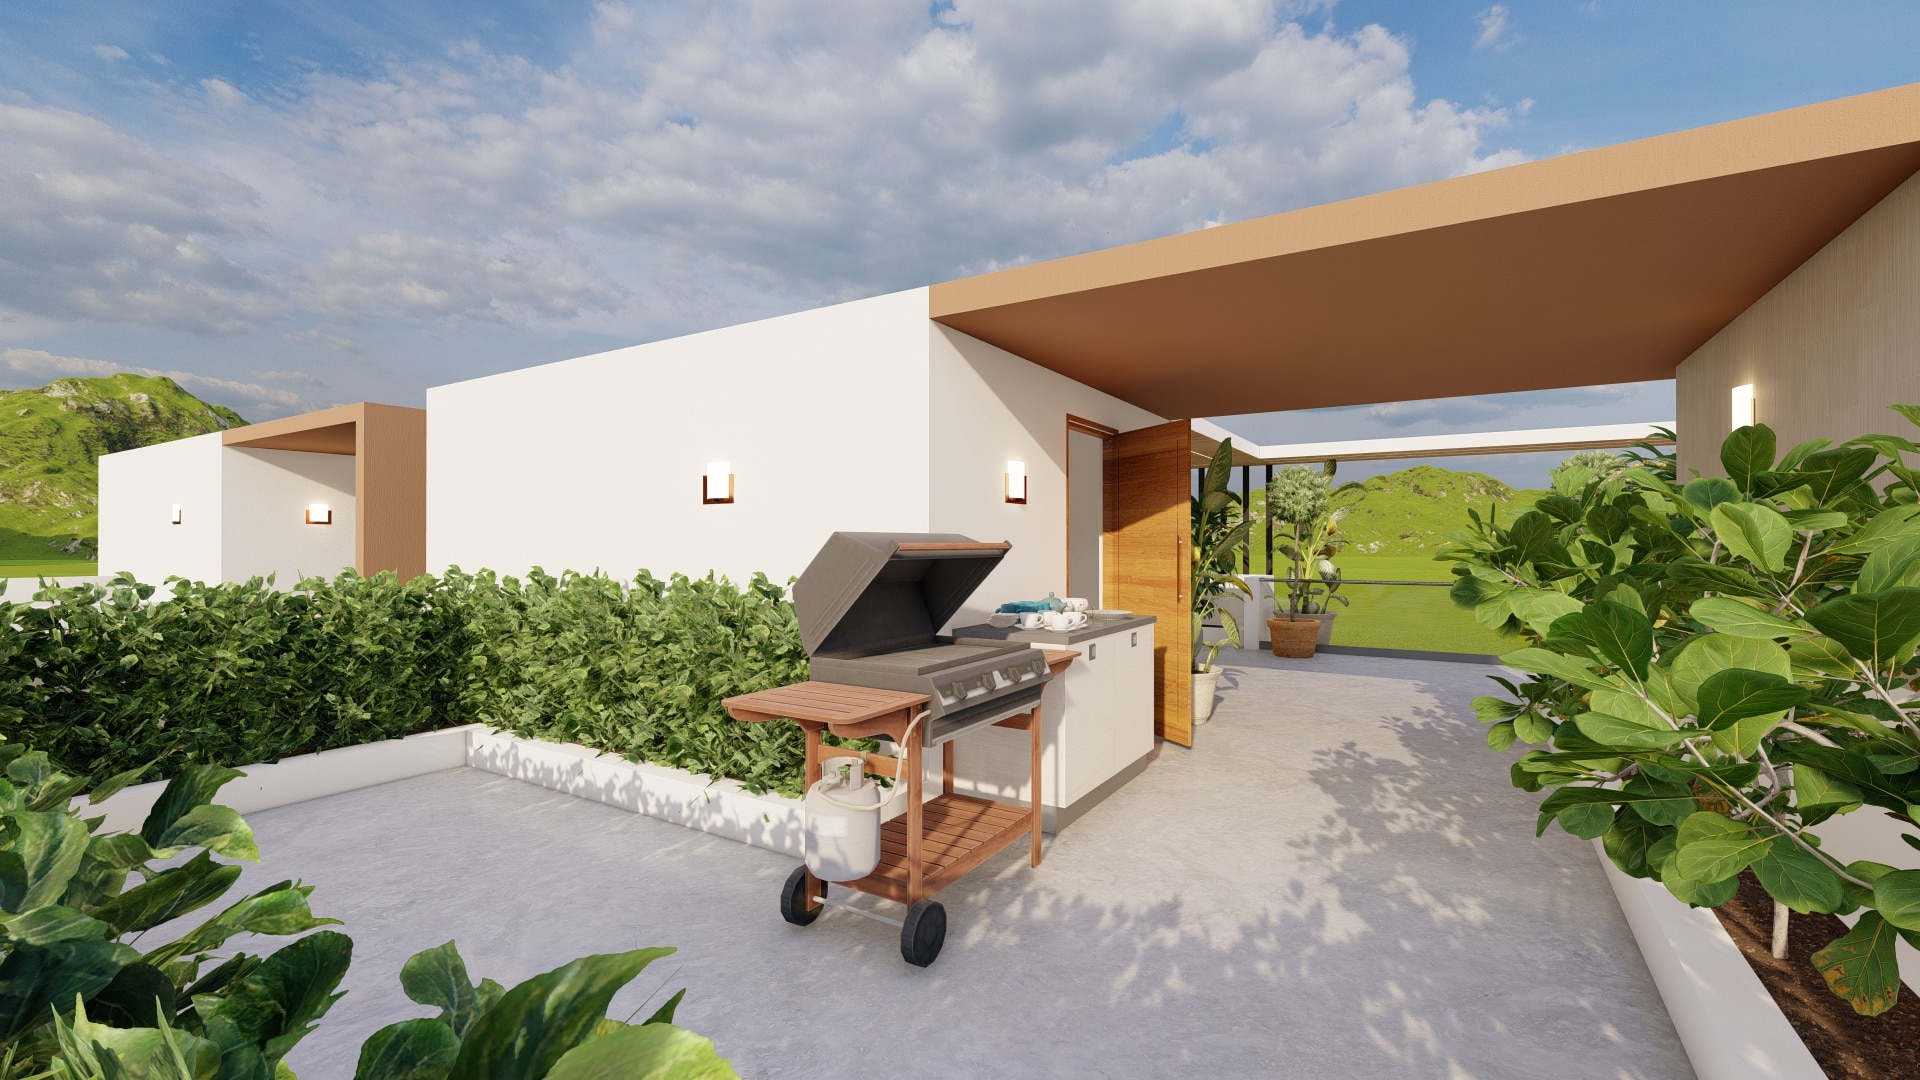 new bungalow home design lavish terrace west facing 1500 ft by urban terrace